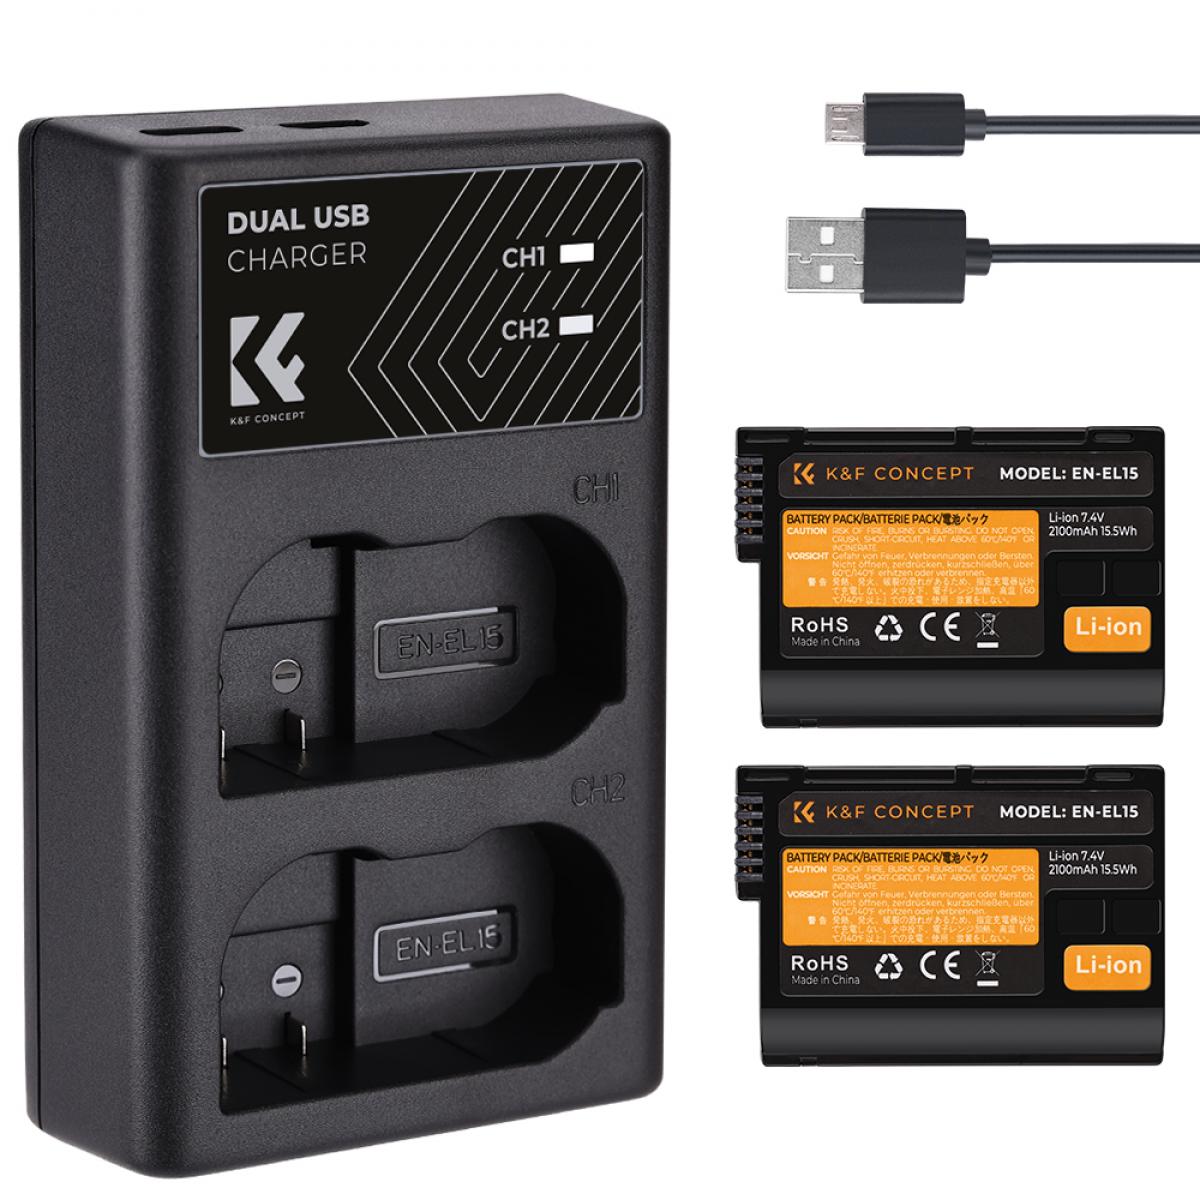 Product Image of K&F Concept nikon EN-EL15 rechargeable battery 2-piece dual slot battery charger kit